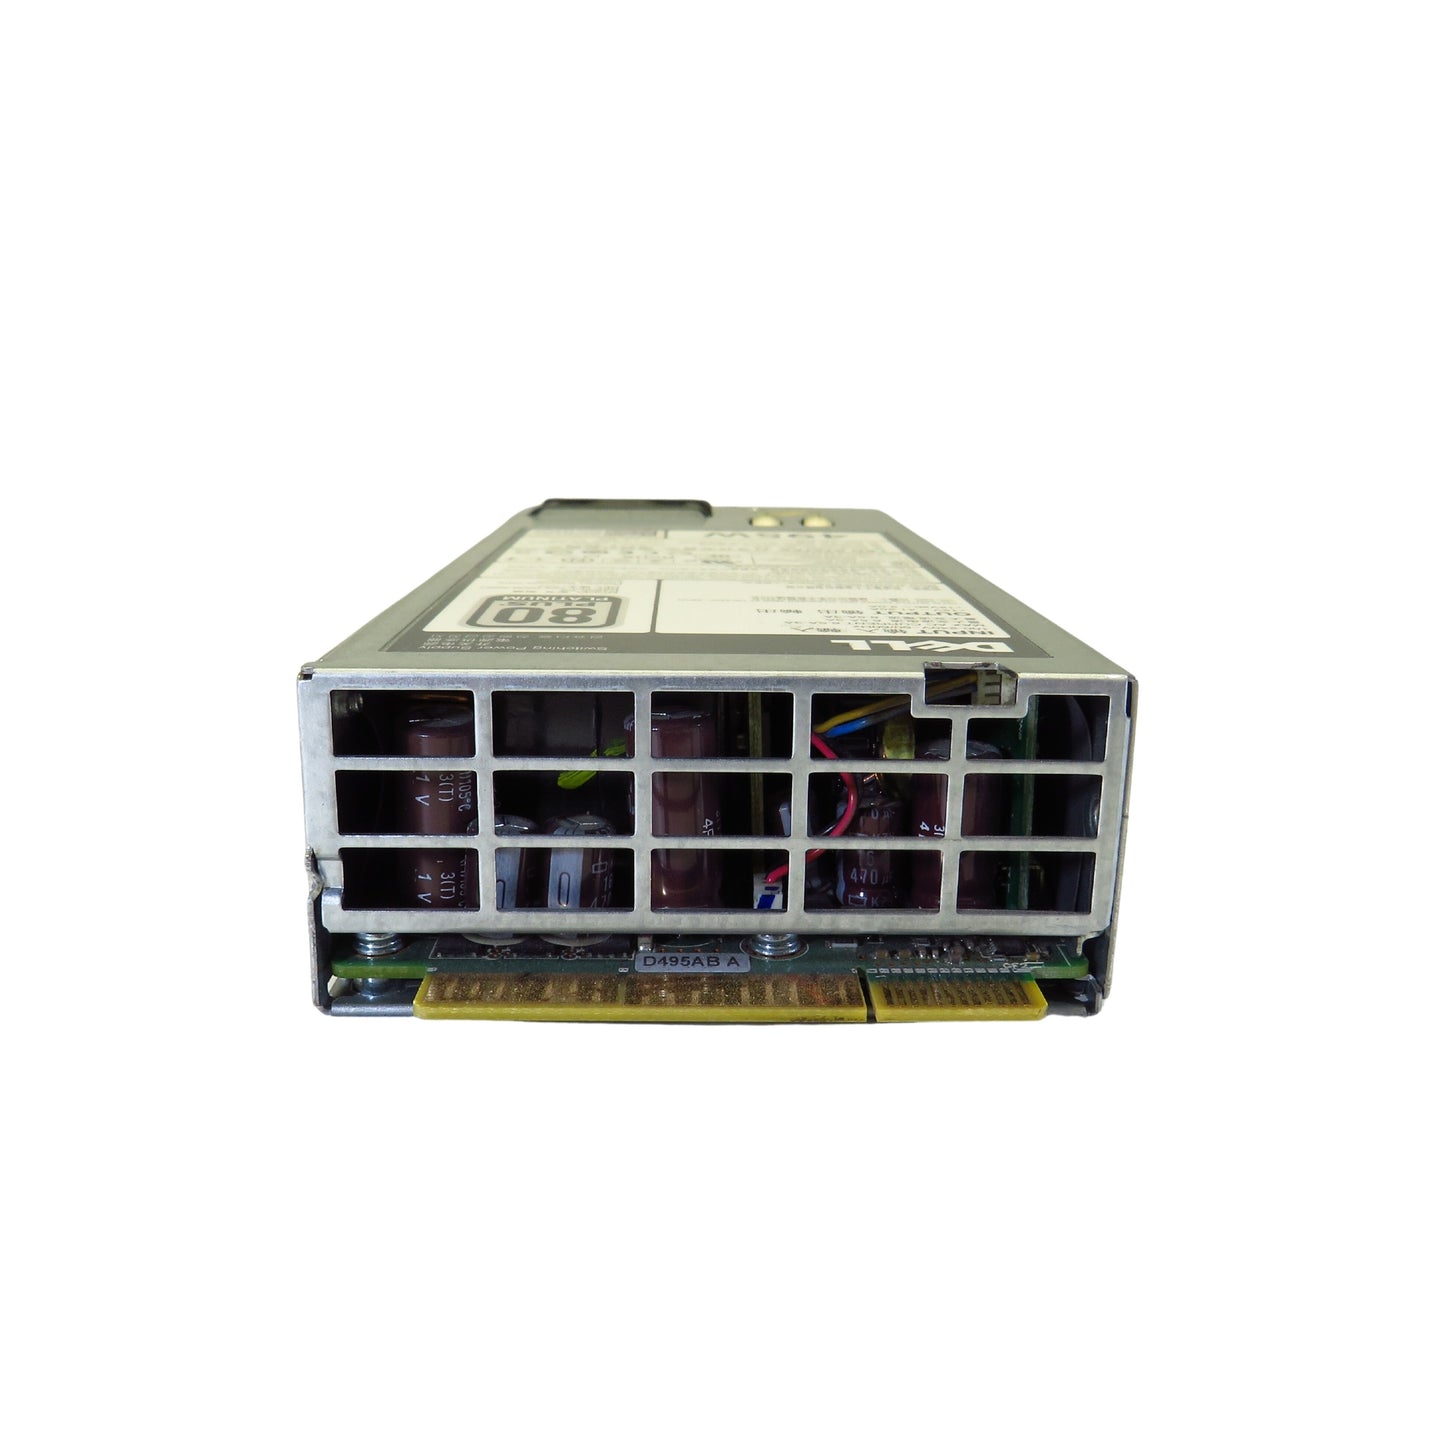 Dell N24MJ 495W R620 R720 PowerEdge Server Power Supply (Refurbished)